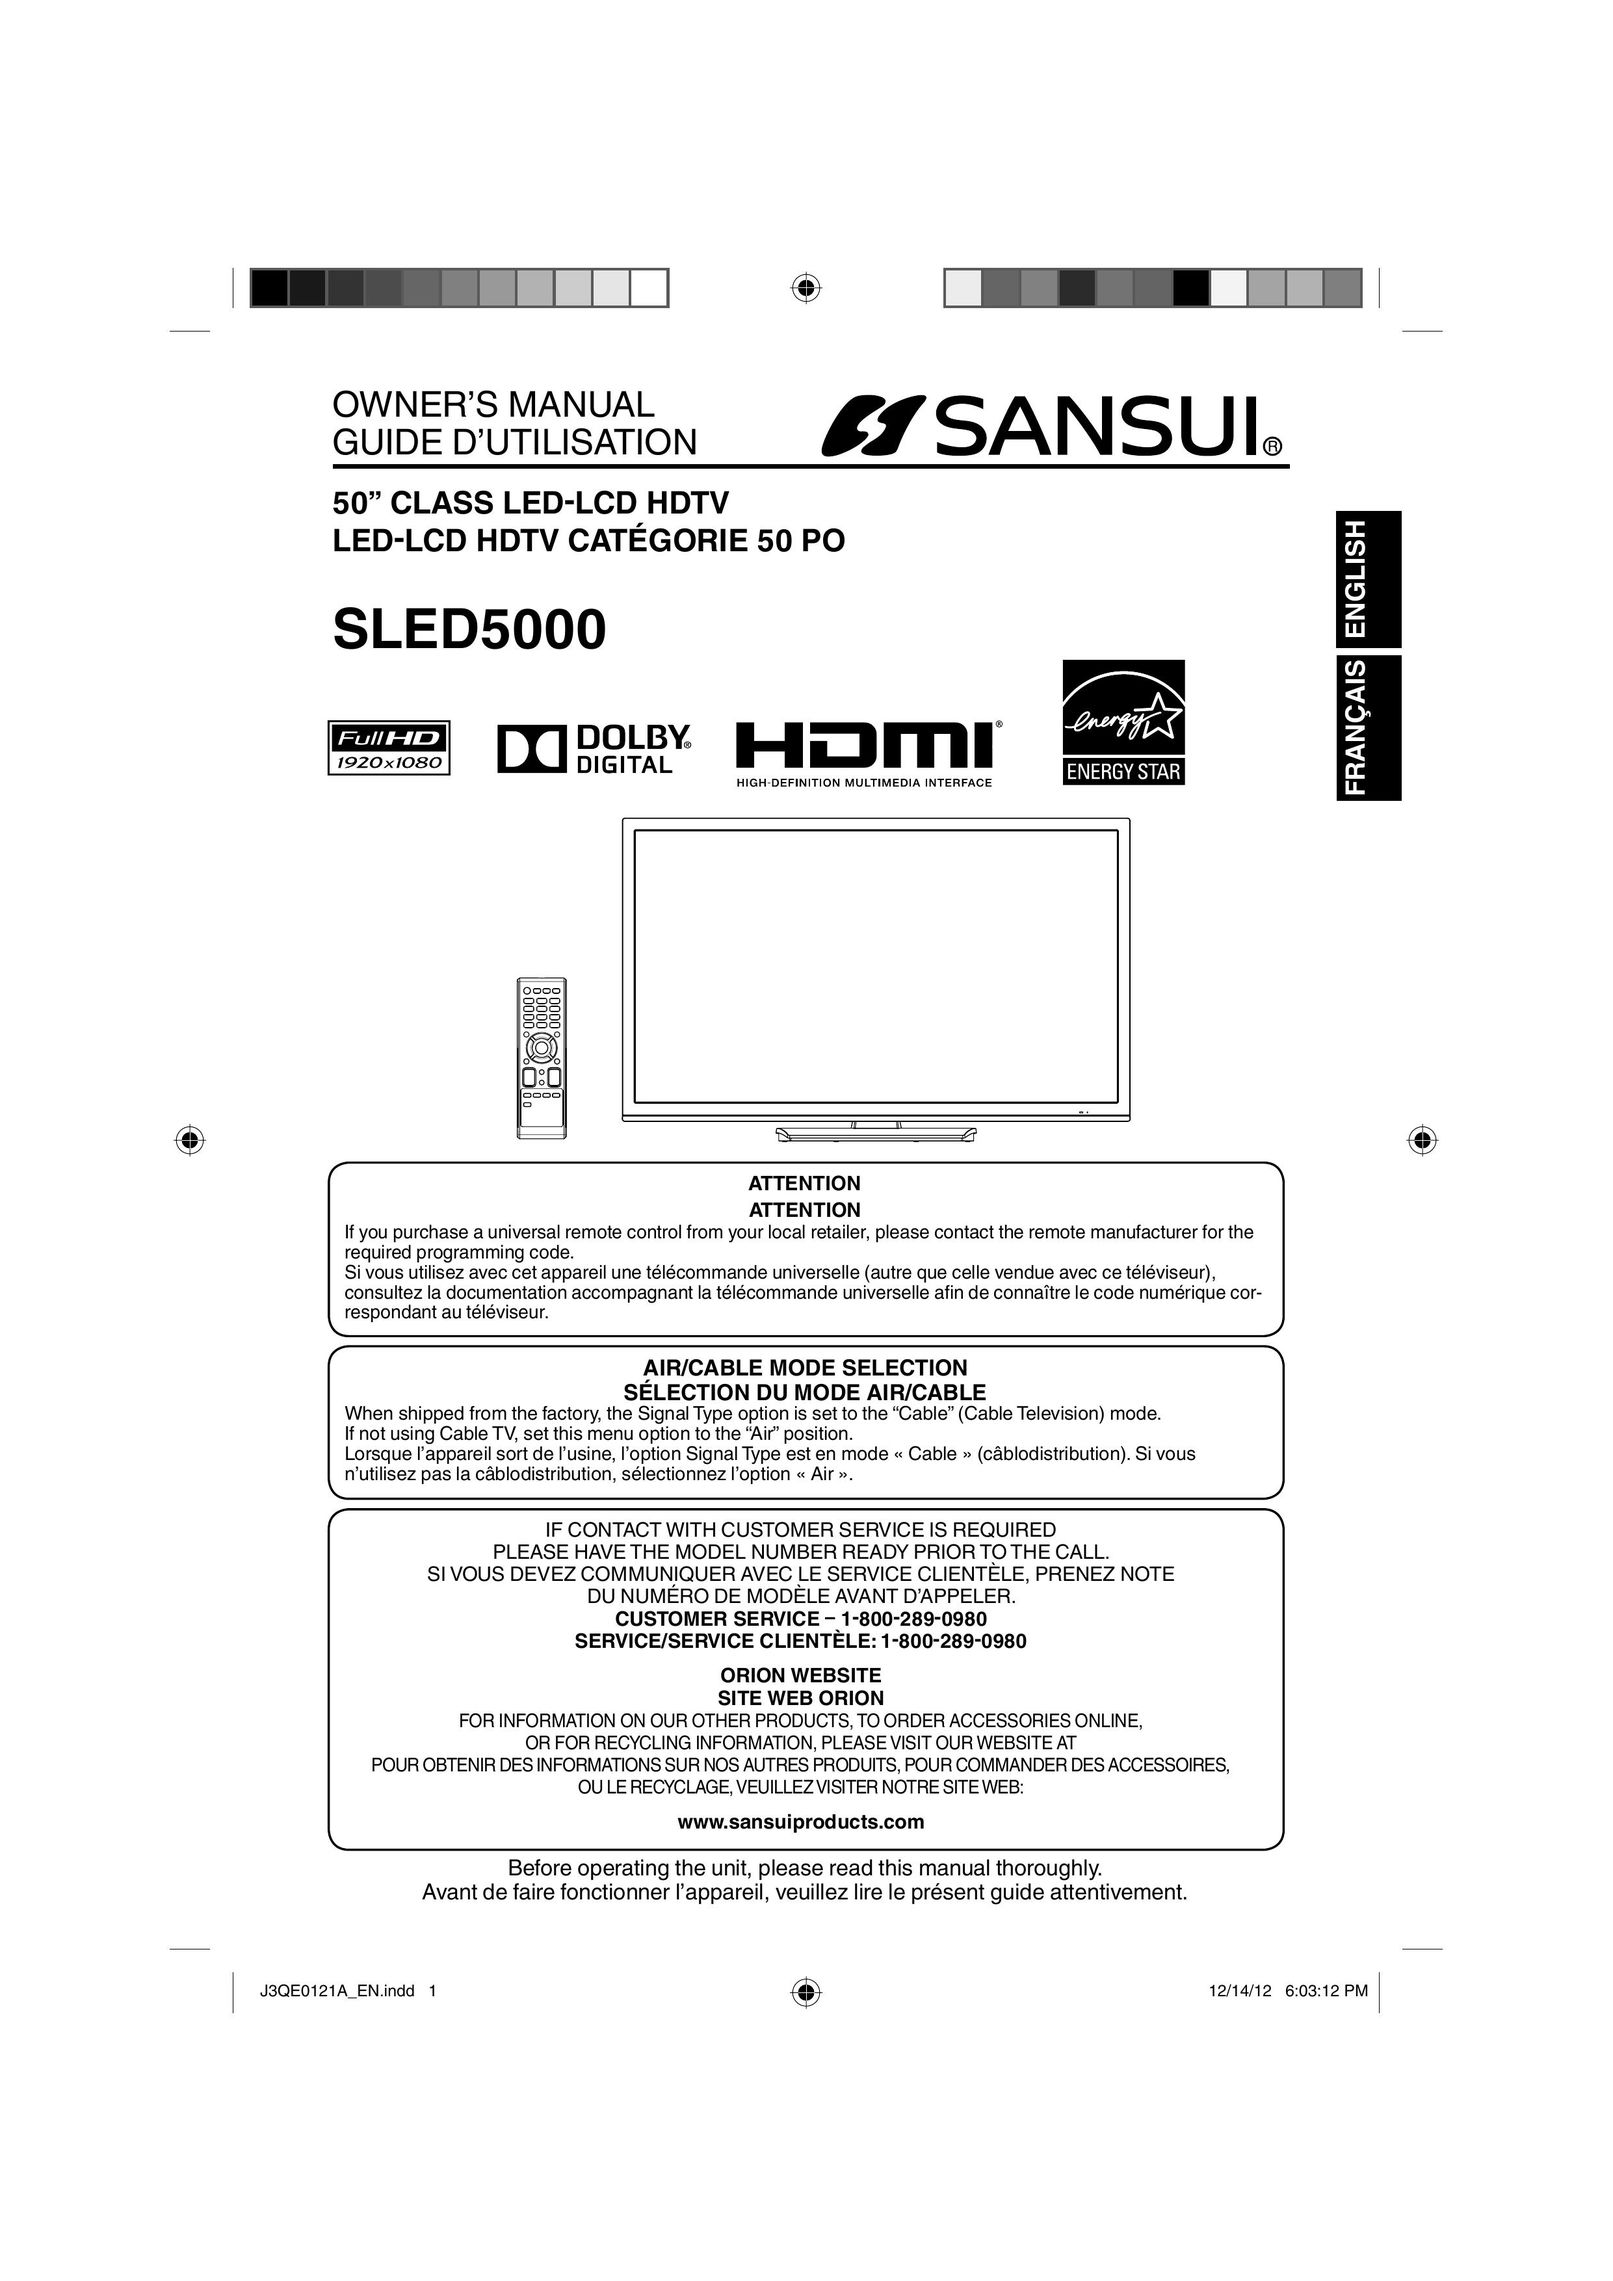 Sansui SLED5000 Flat Panel Television User Manual